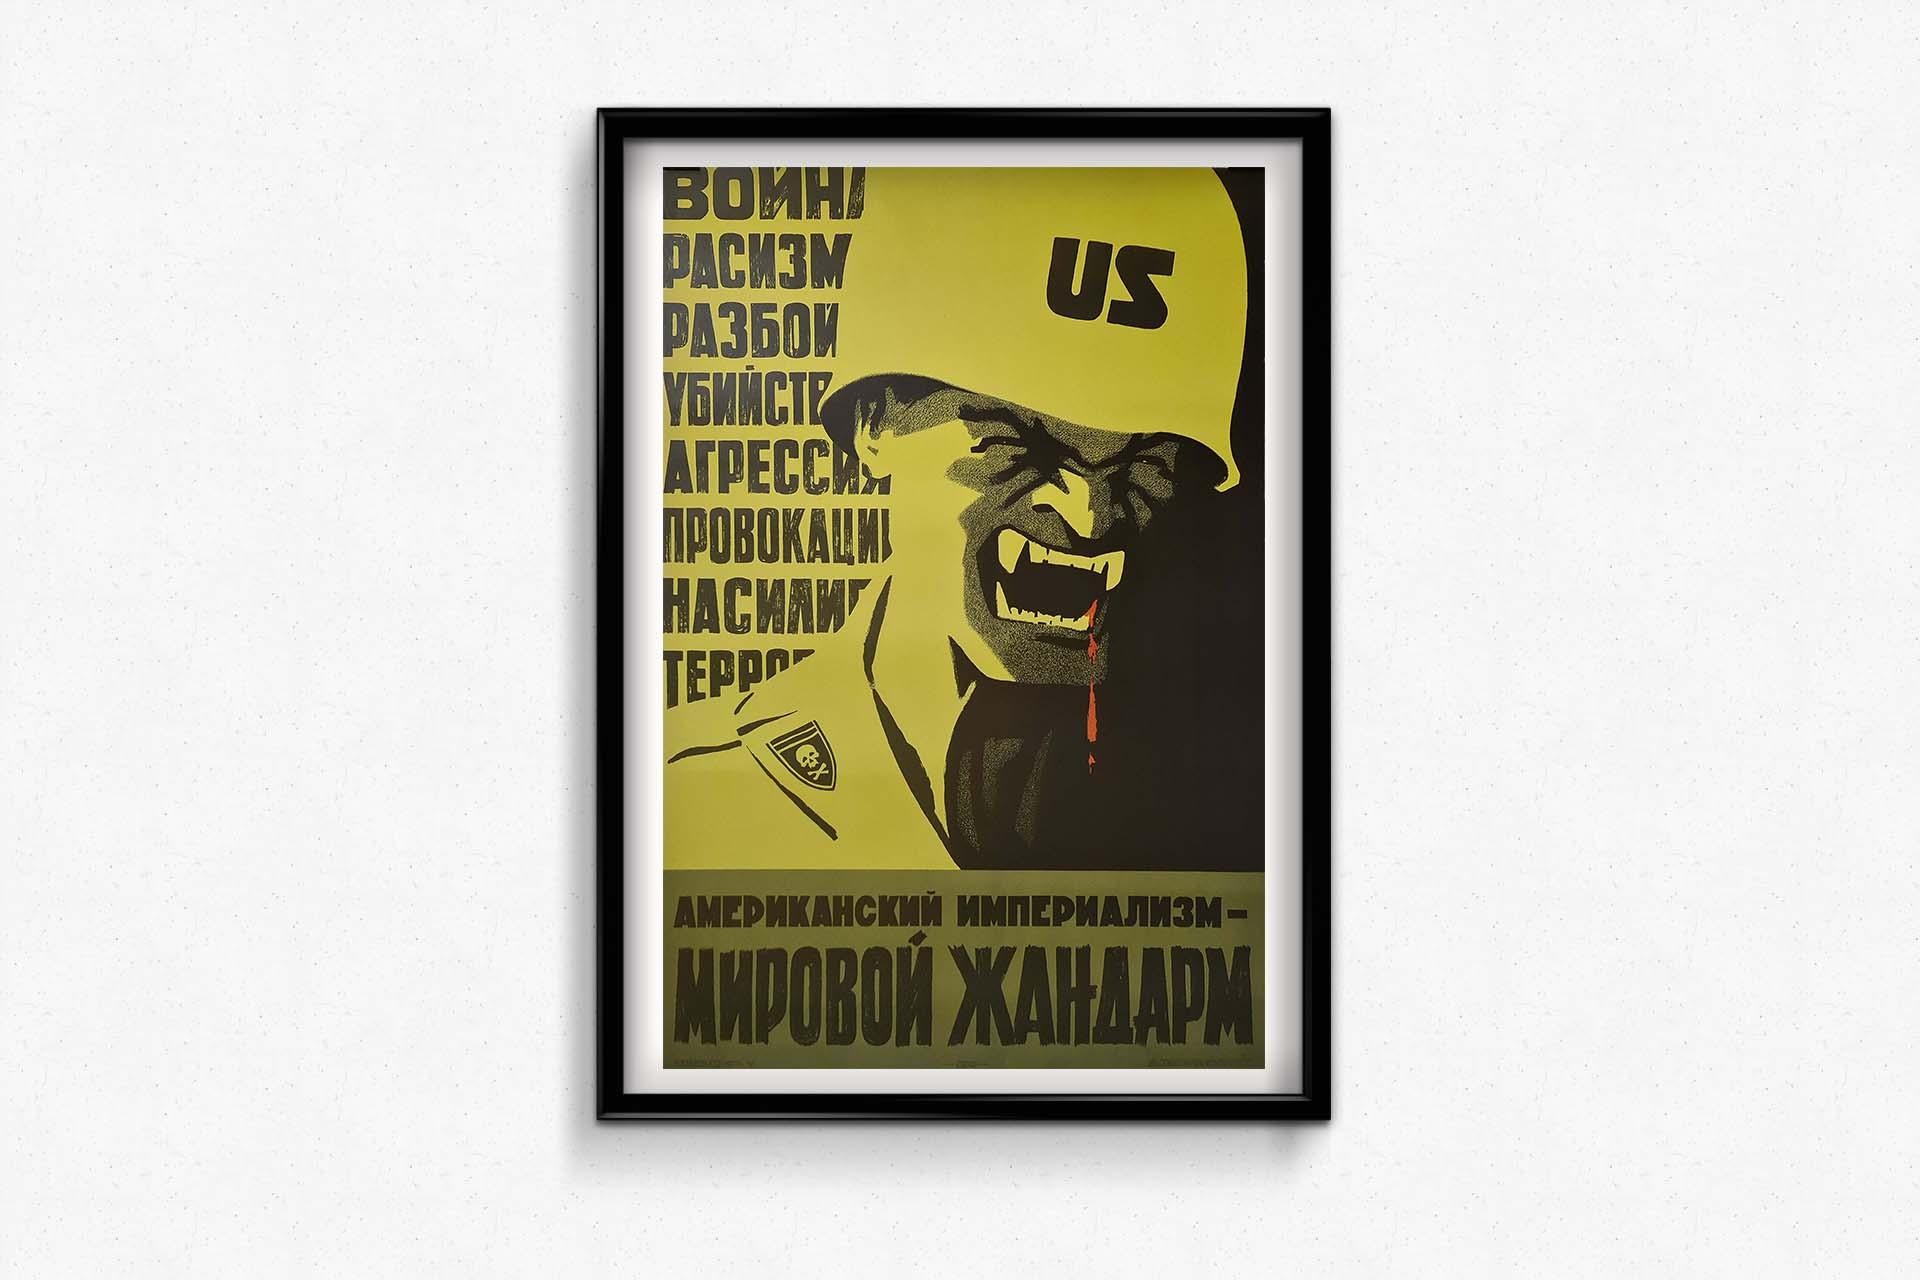 The original Soviet poster from 1968, 